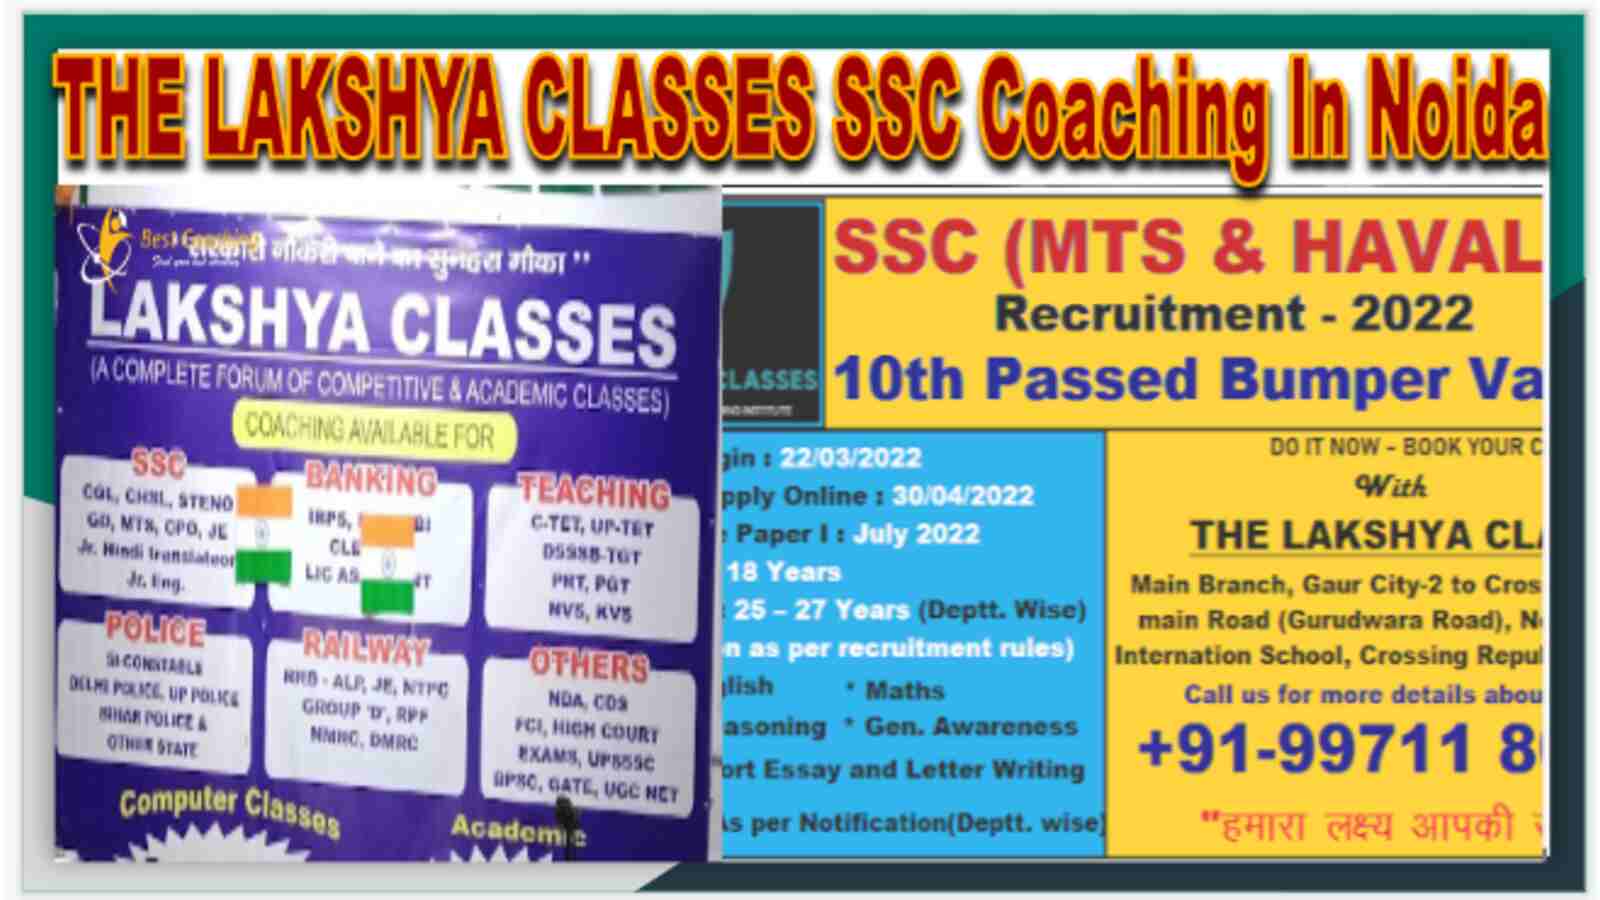 THE LAKSHYA CLASSES SSC Coaching In Noida